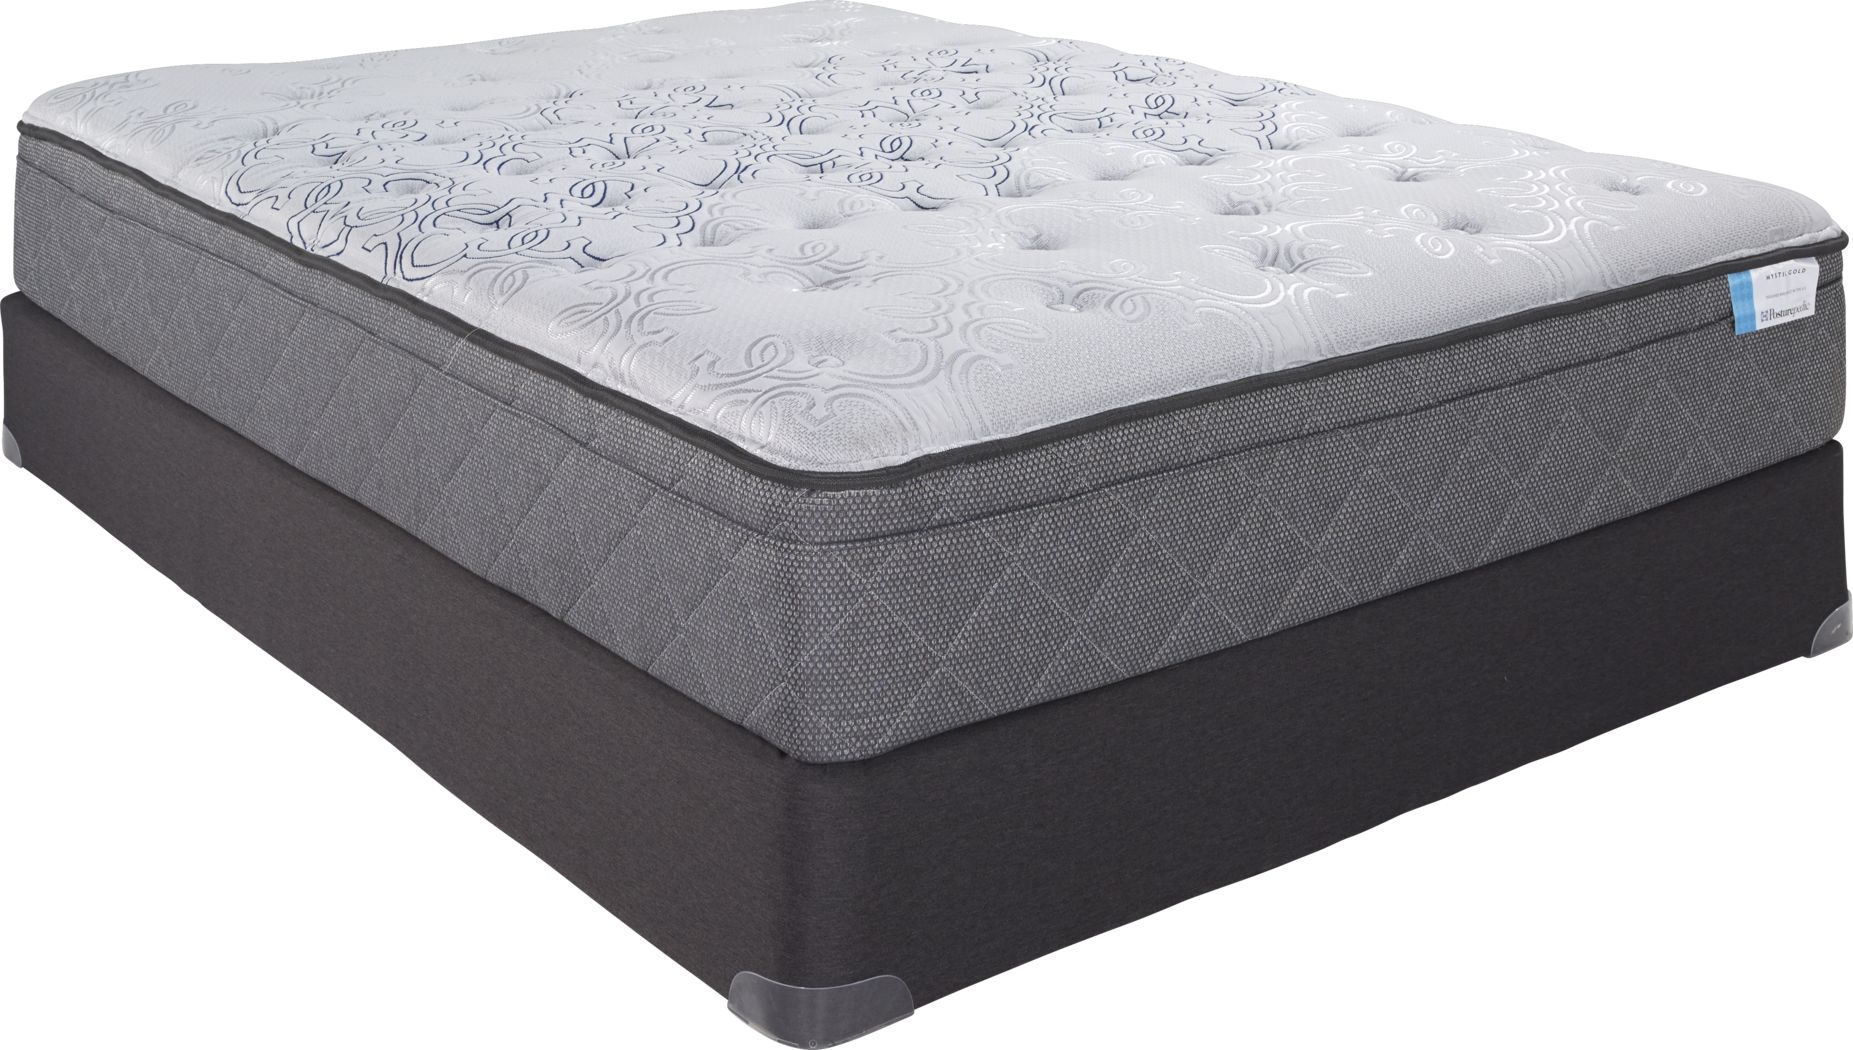 low profile queen mattress sheets